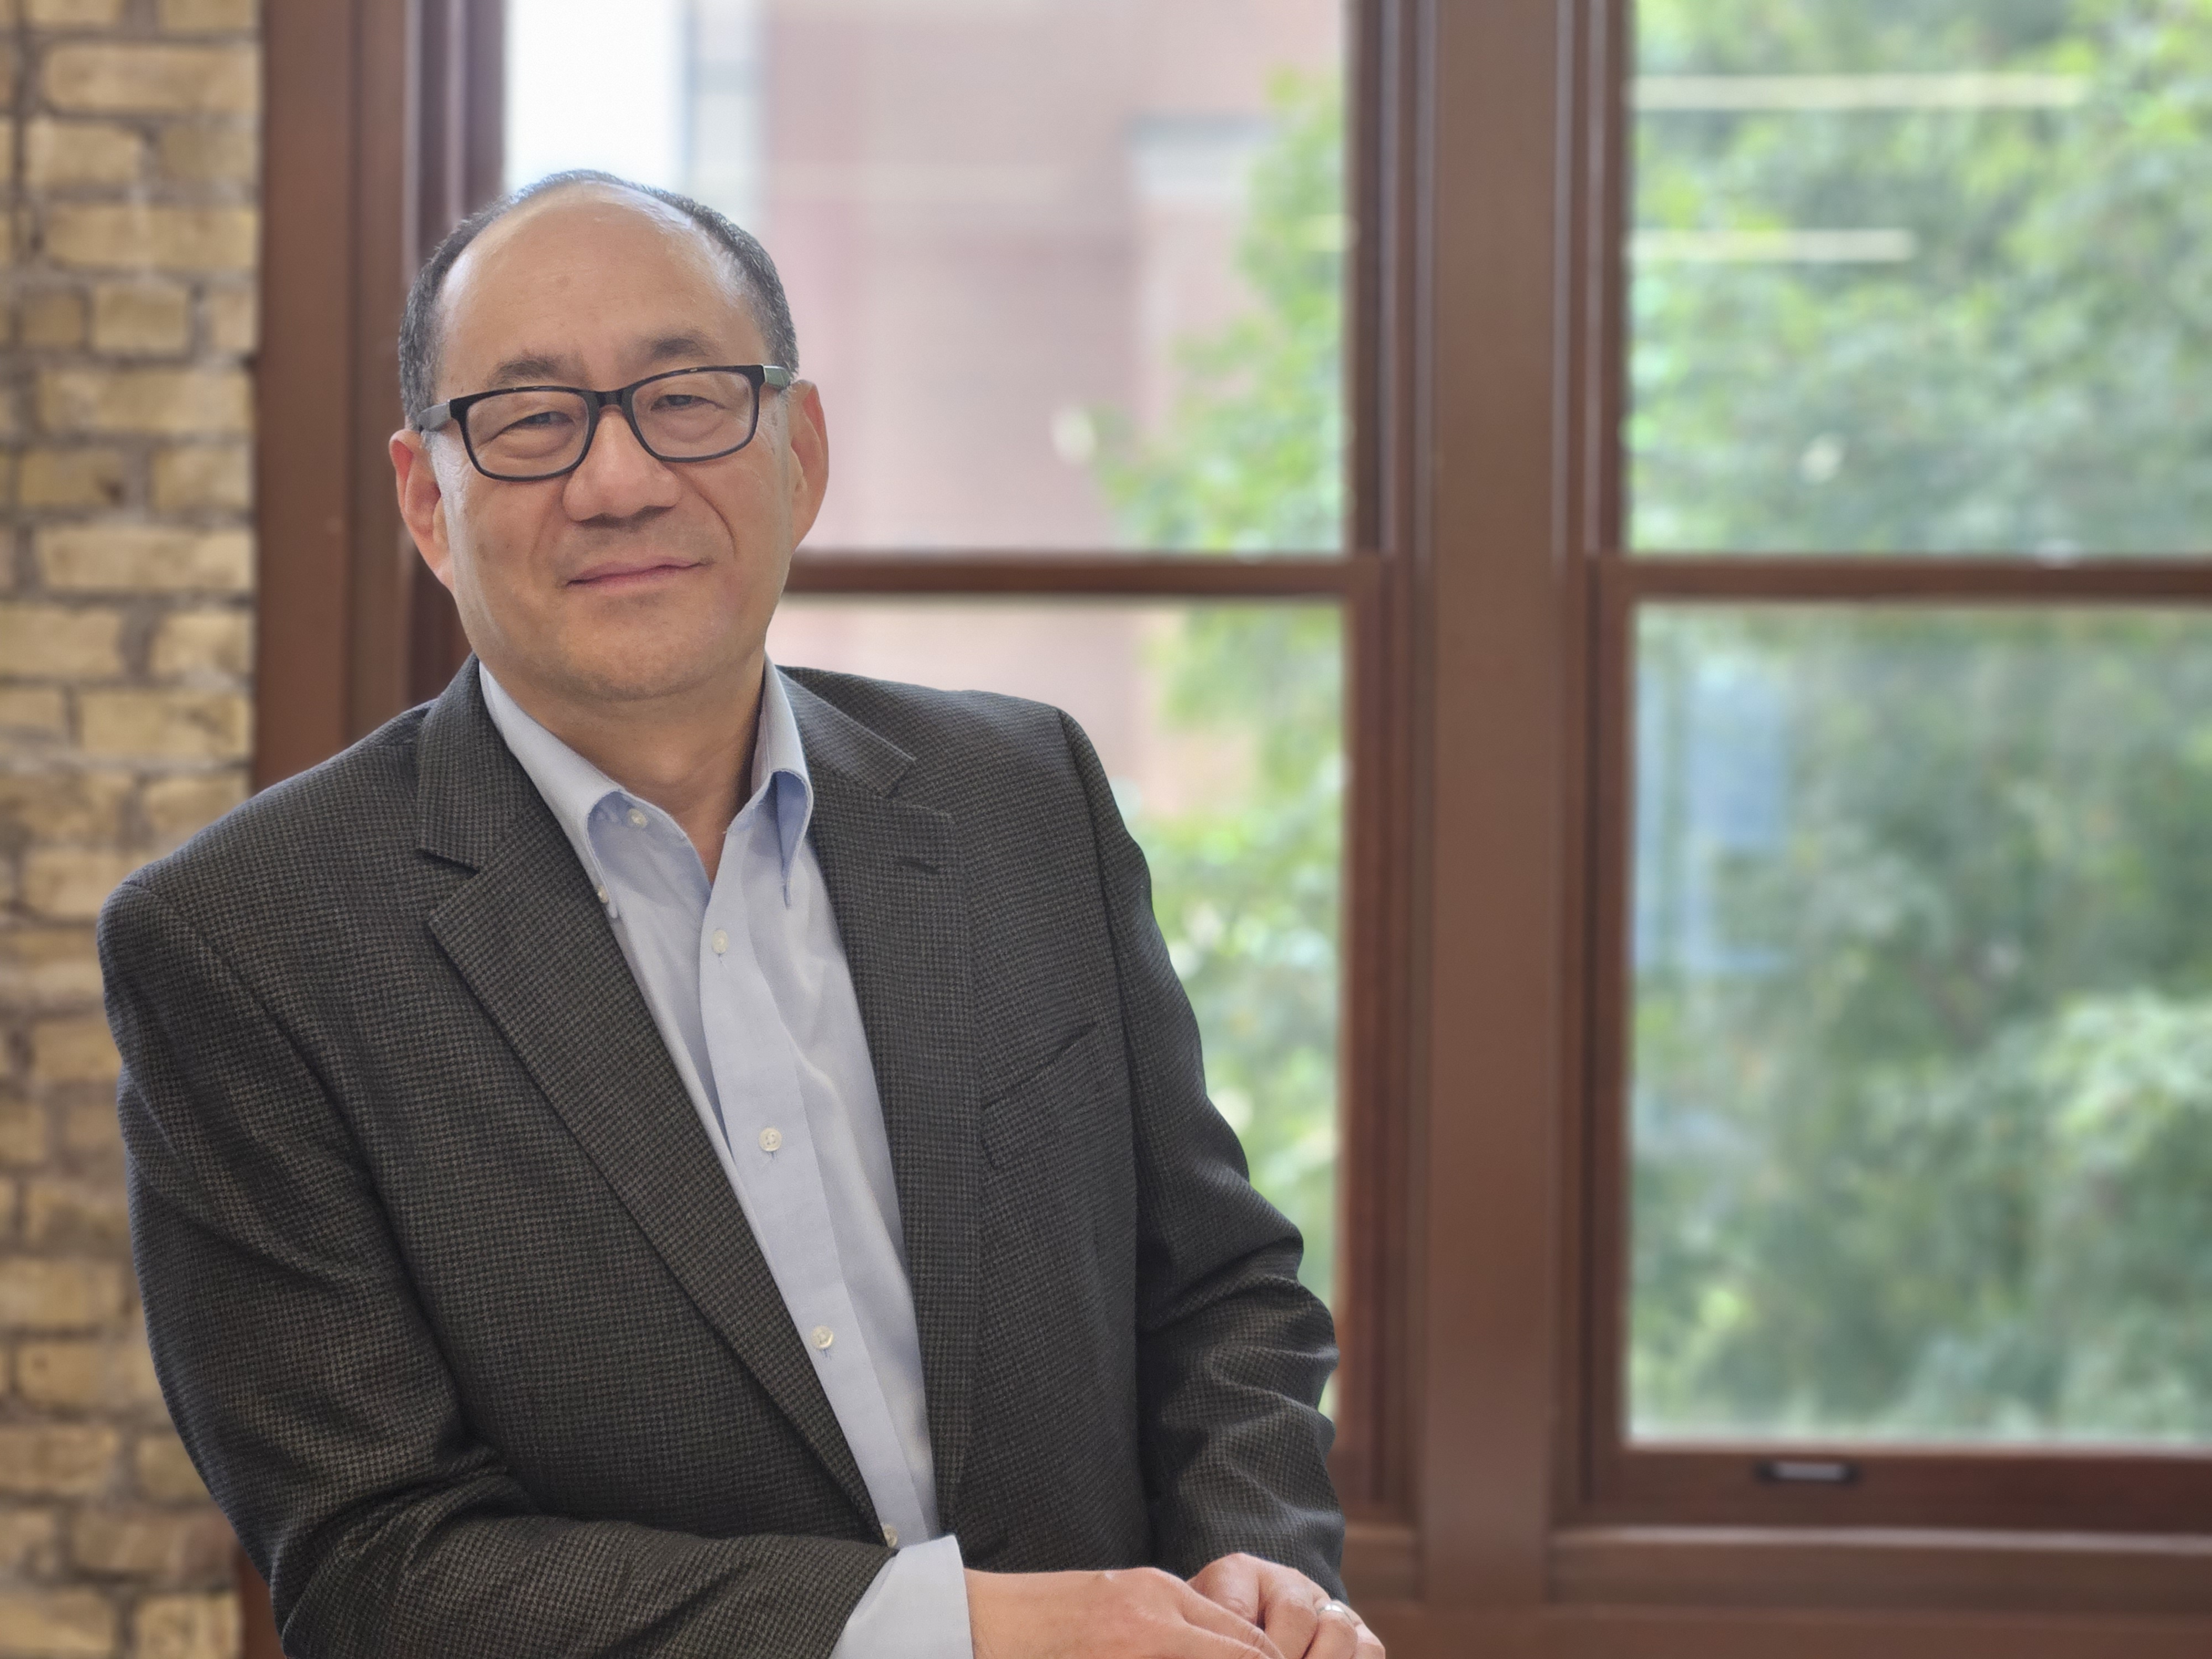 Dr. Shuzhong Zhang, Professor and Interim Department Head